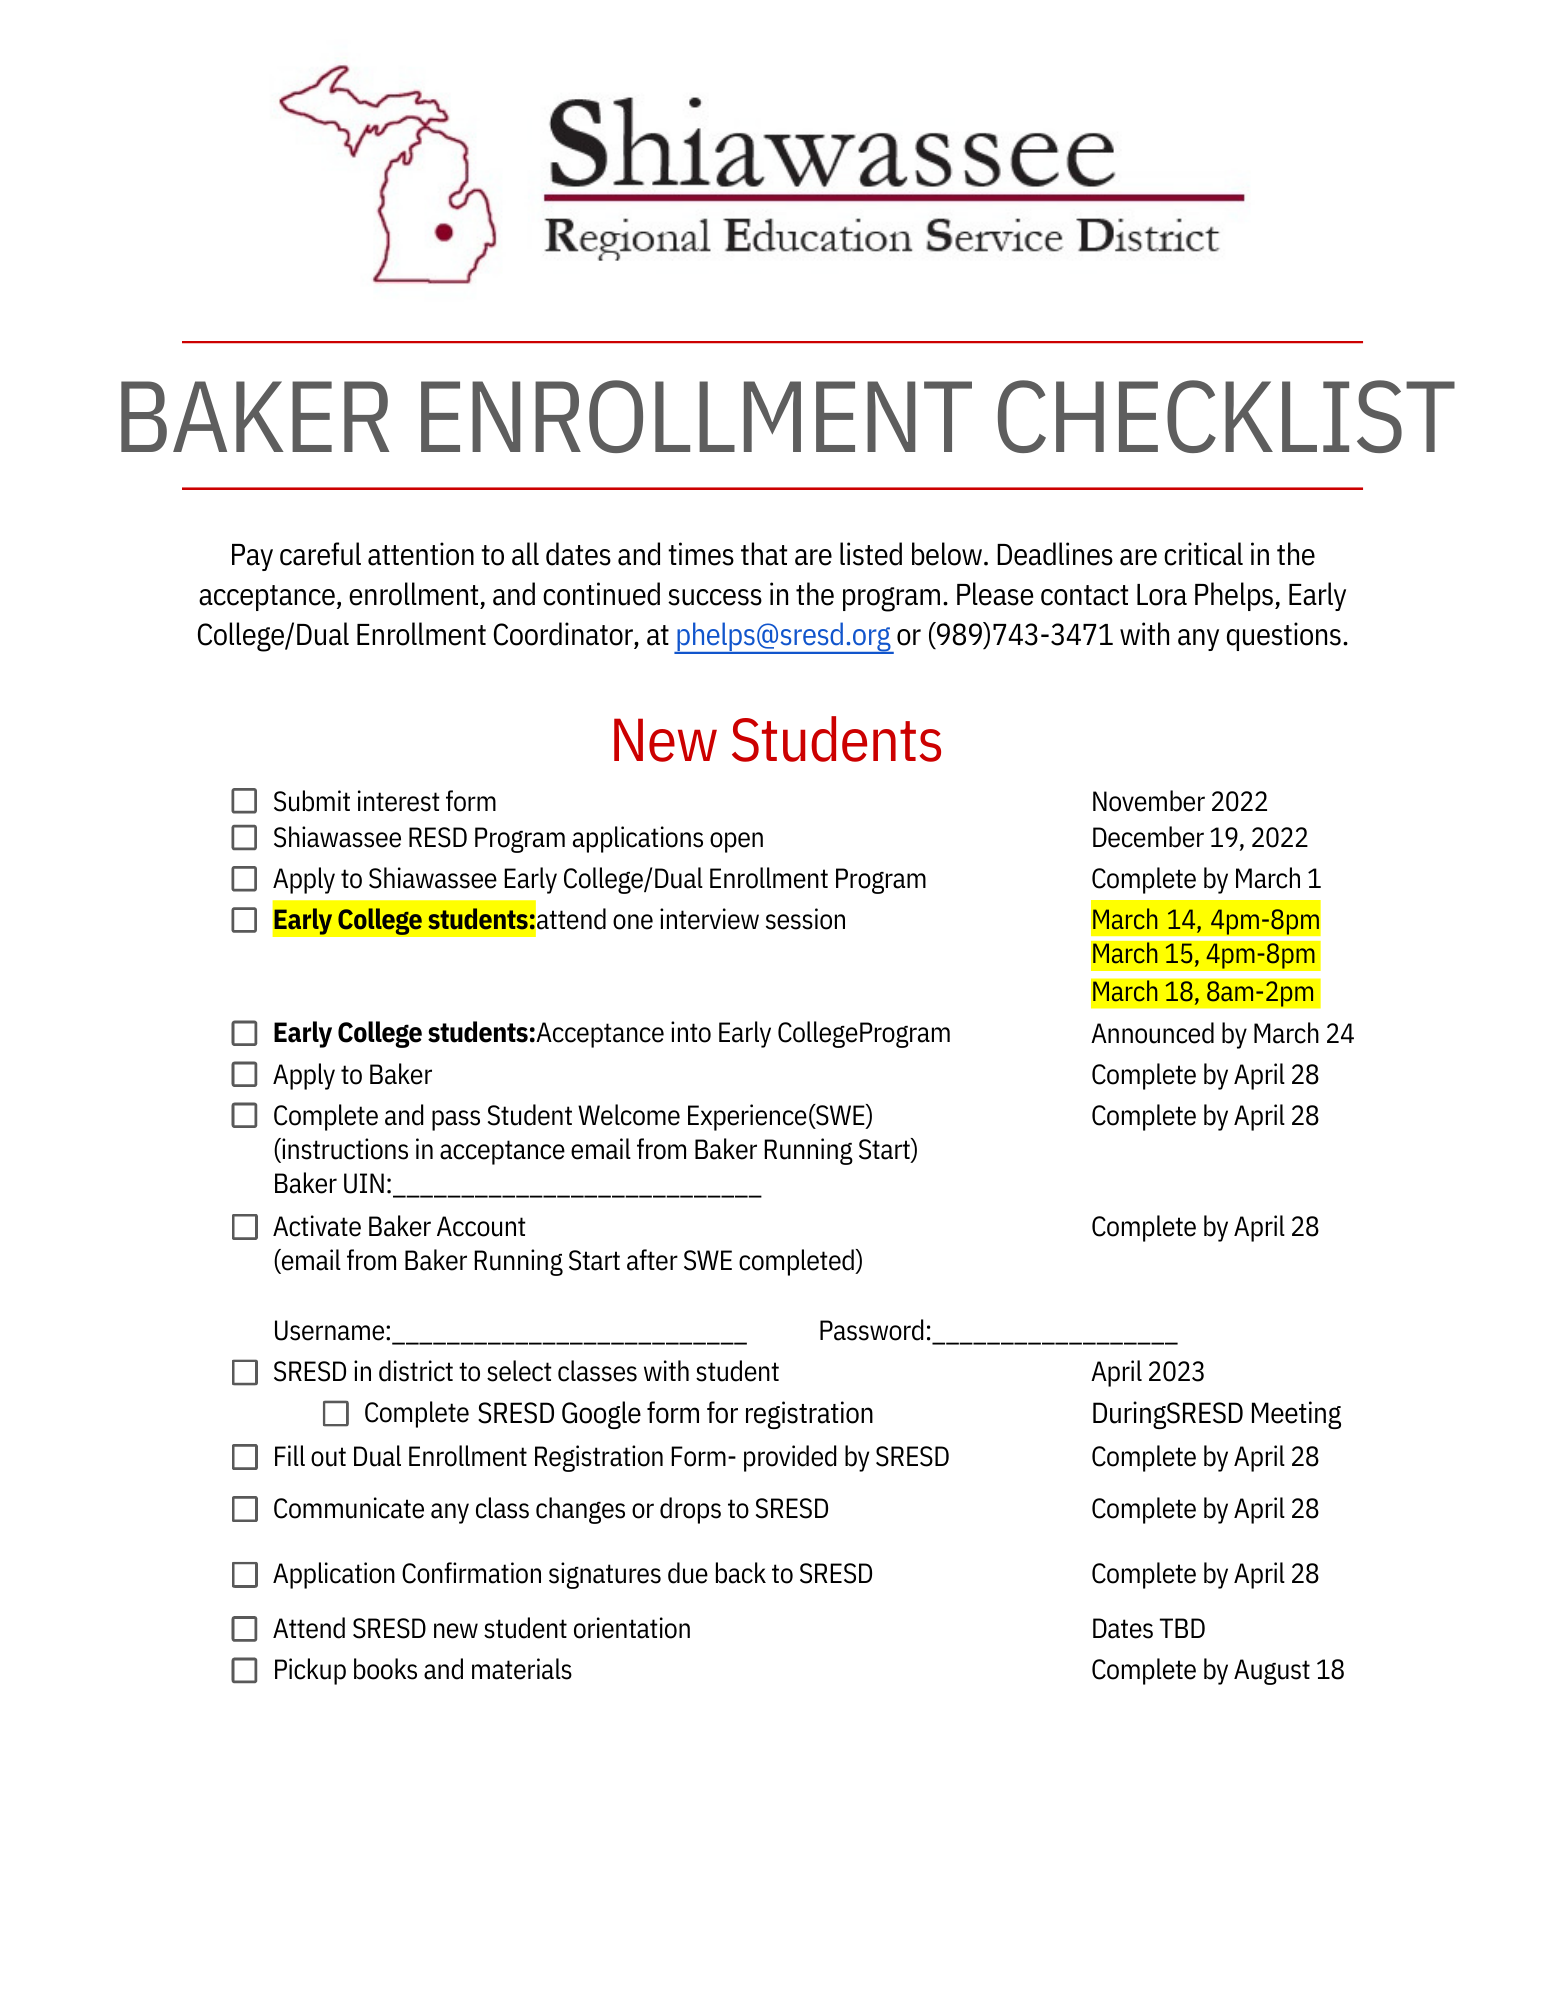 Baker 23-24 enrollment checklist